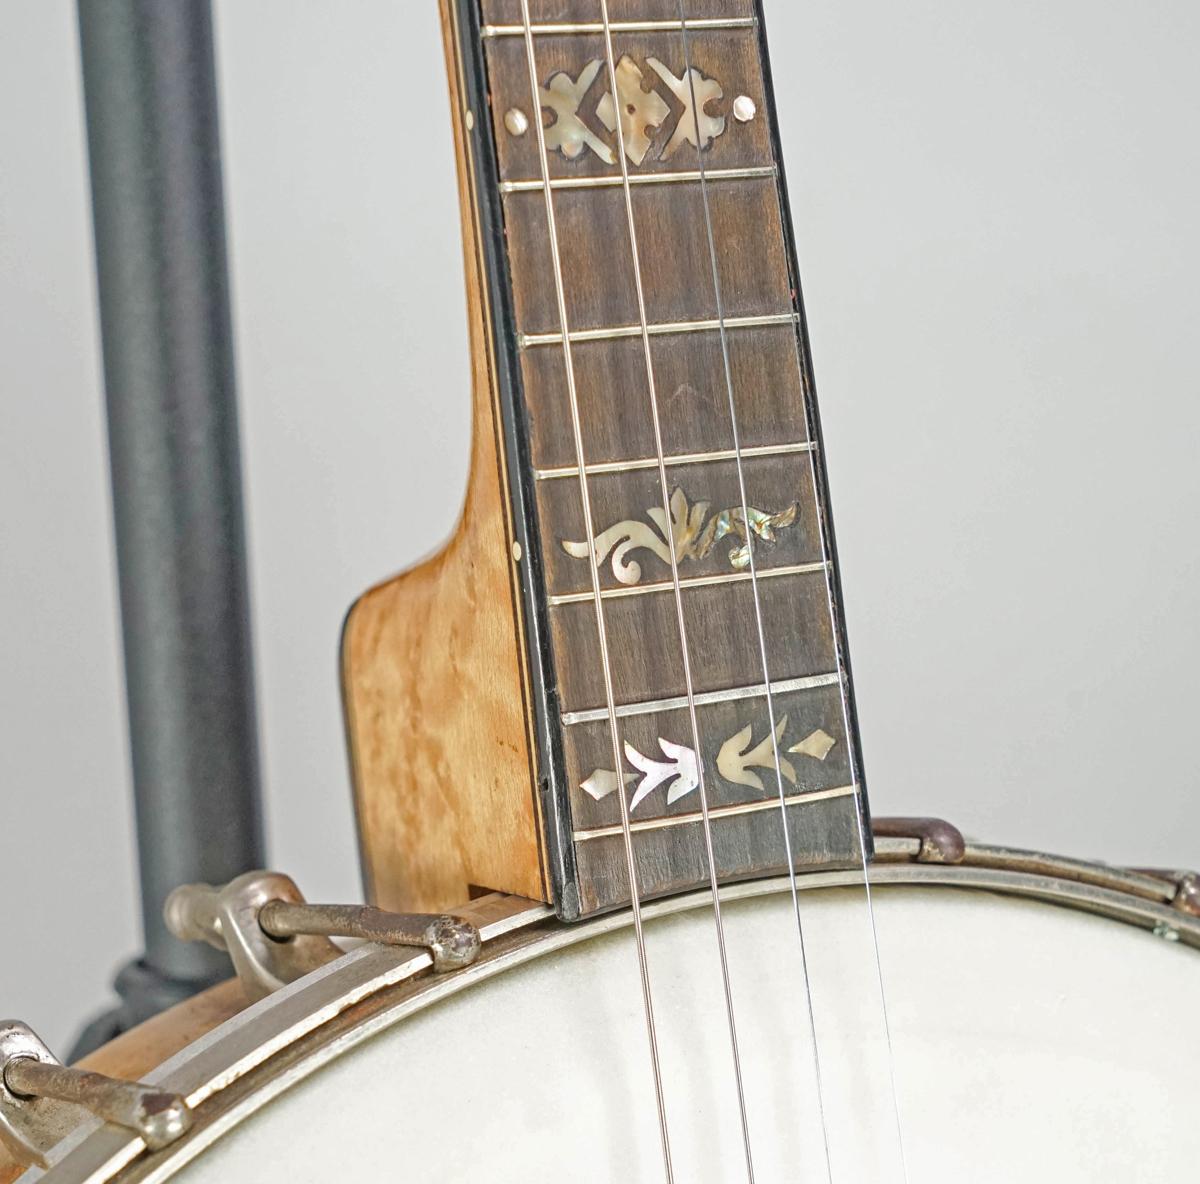 Orpheum #1 Tenor Banjo, Ca. 1920